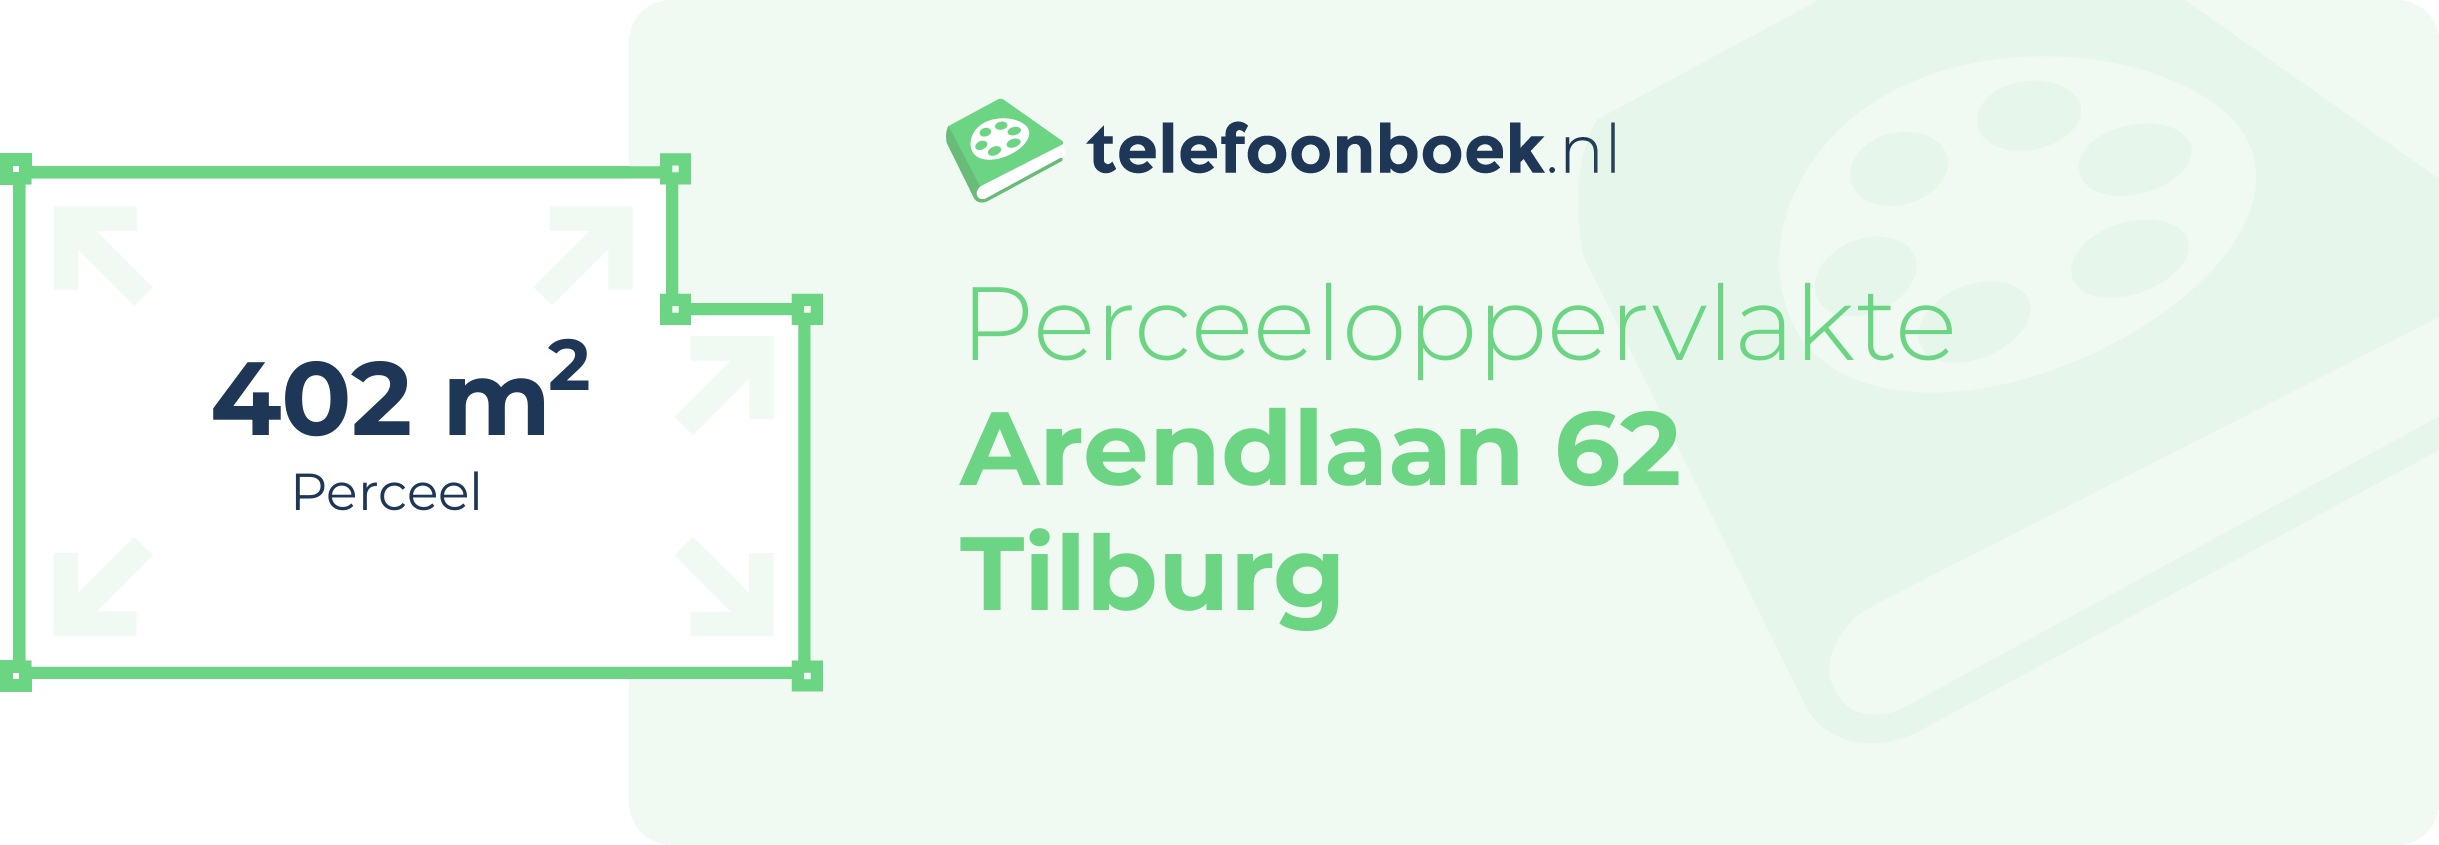 Perceeloppervlakte Arendlaan 62 Tilburg